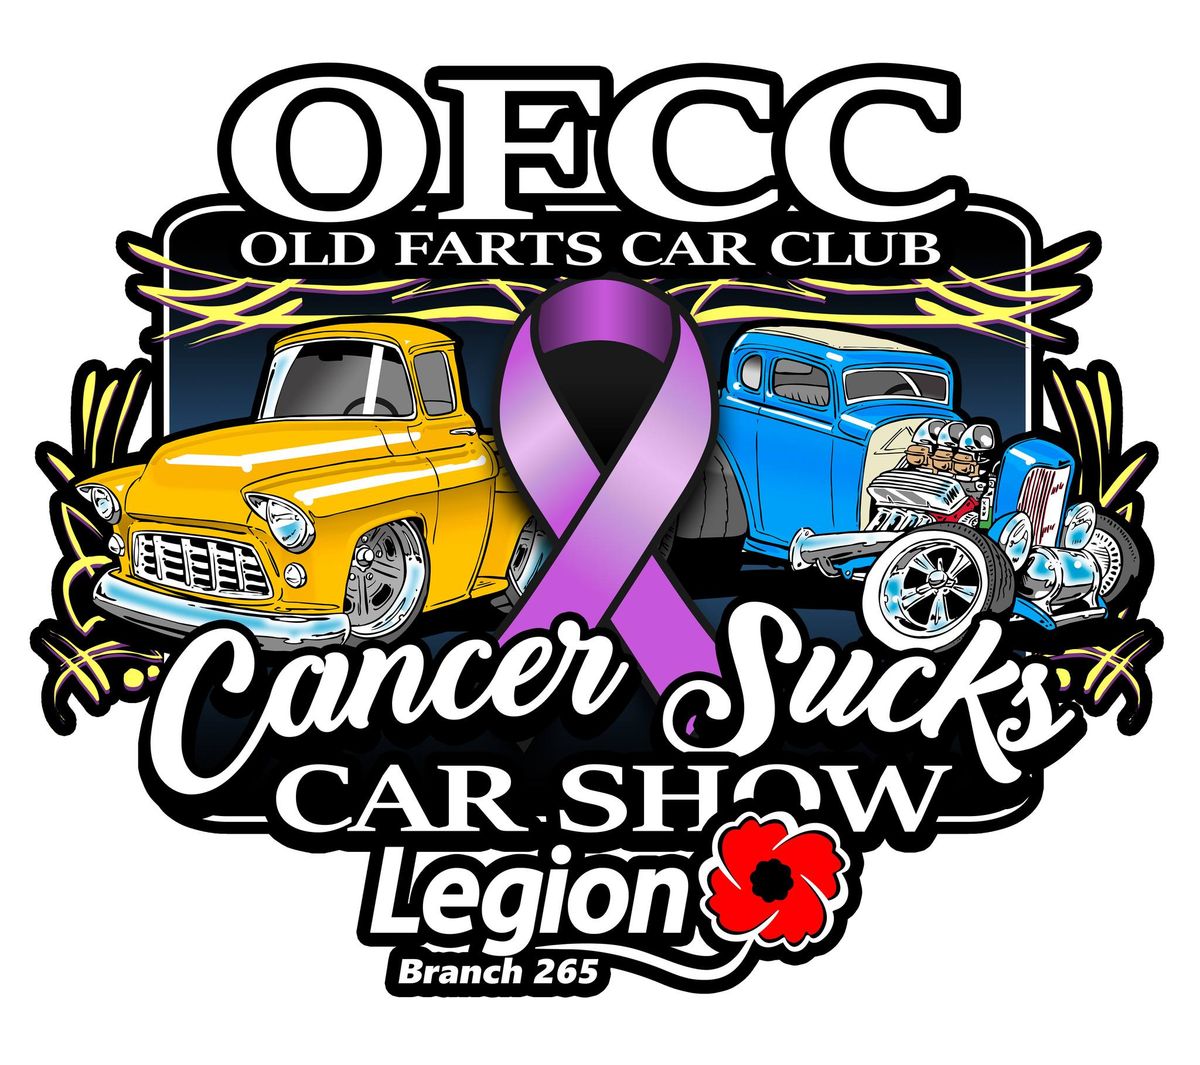 OFCC Fight Against Cancer Car Show